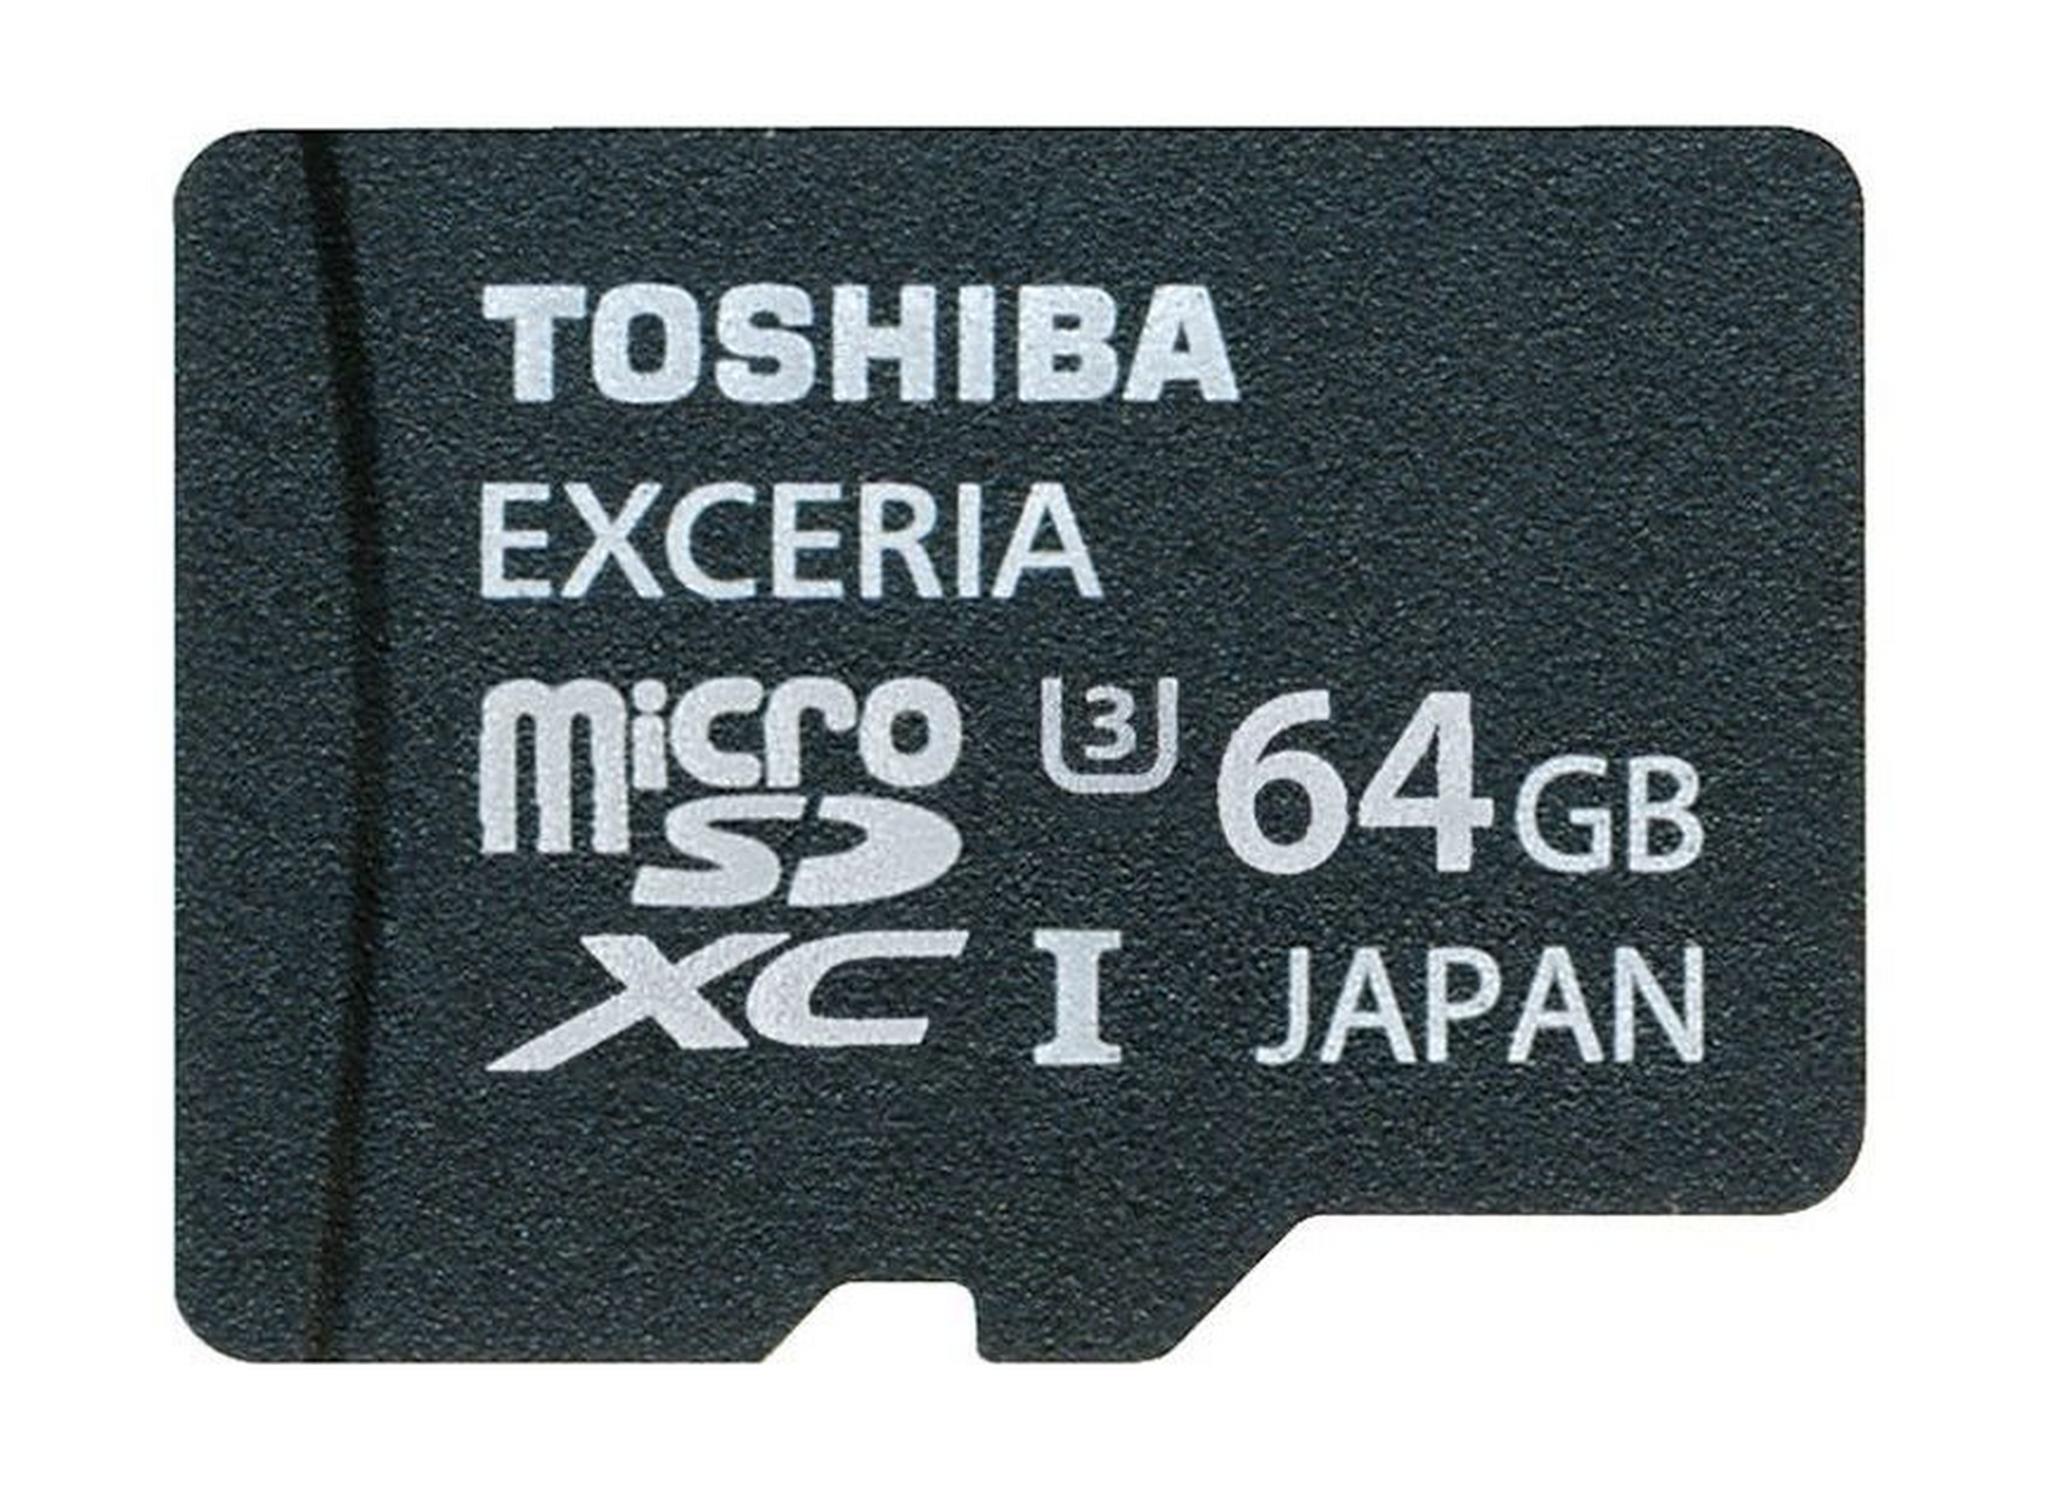 Toshiba Exceria UHS 64 GB Class 10 95Mb/s MicroSD Memory Card - SD-CX64UHS1